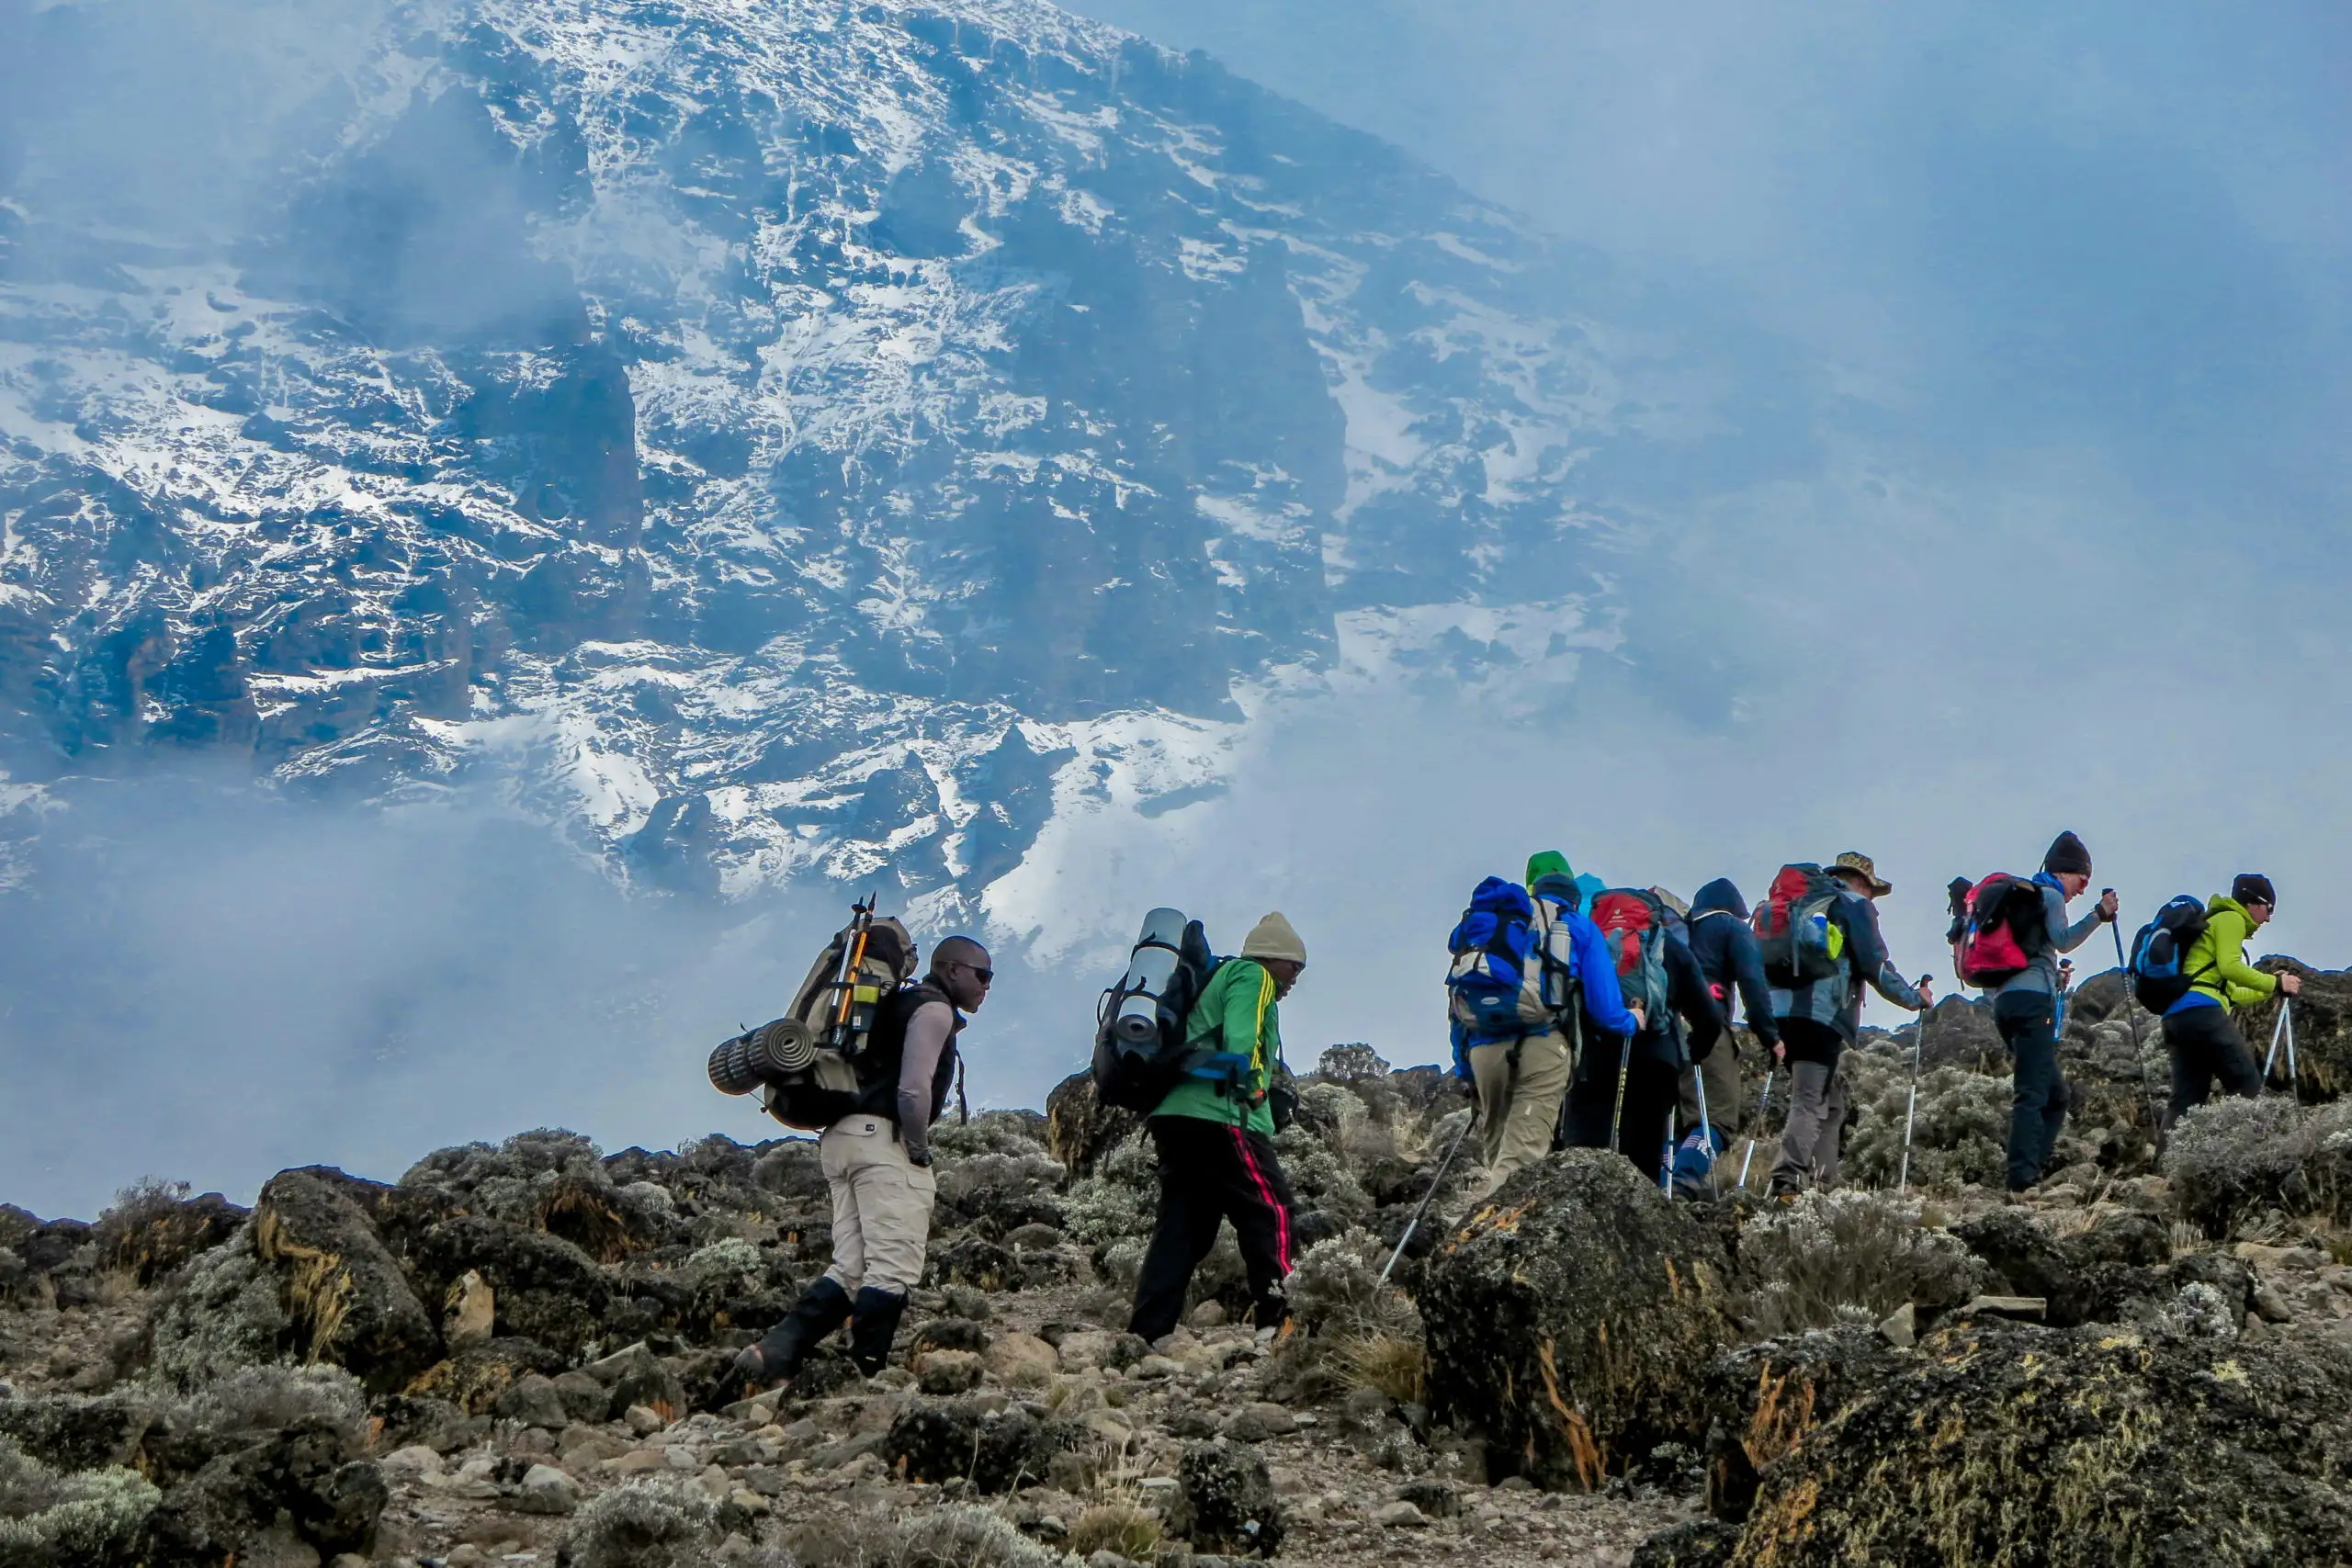 Group hiking mount Kilimanjaro Lemosho route with large snowy peak in the background